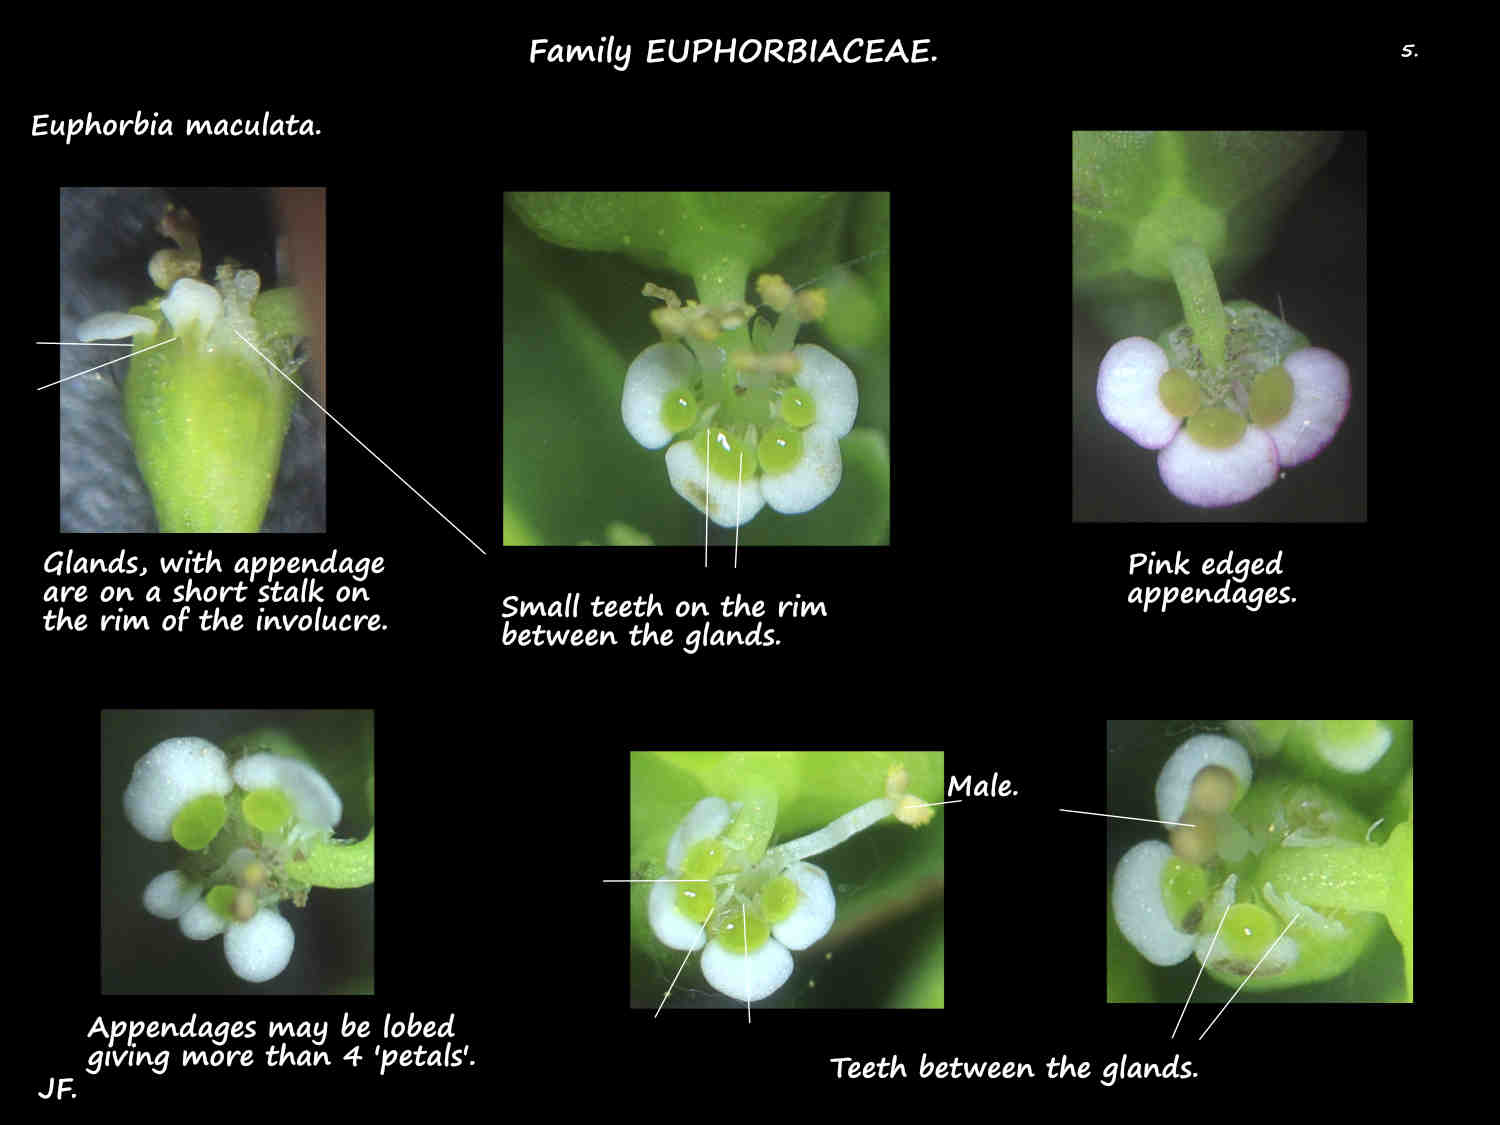 5 Glands & appendages on Euphorbia maculata involucres